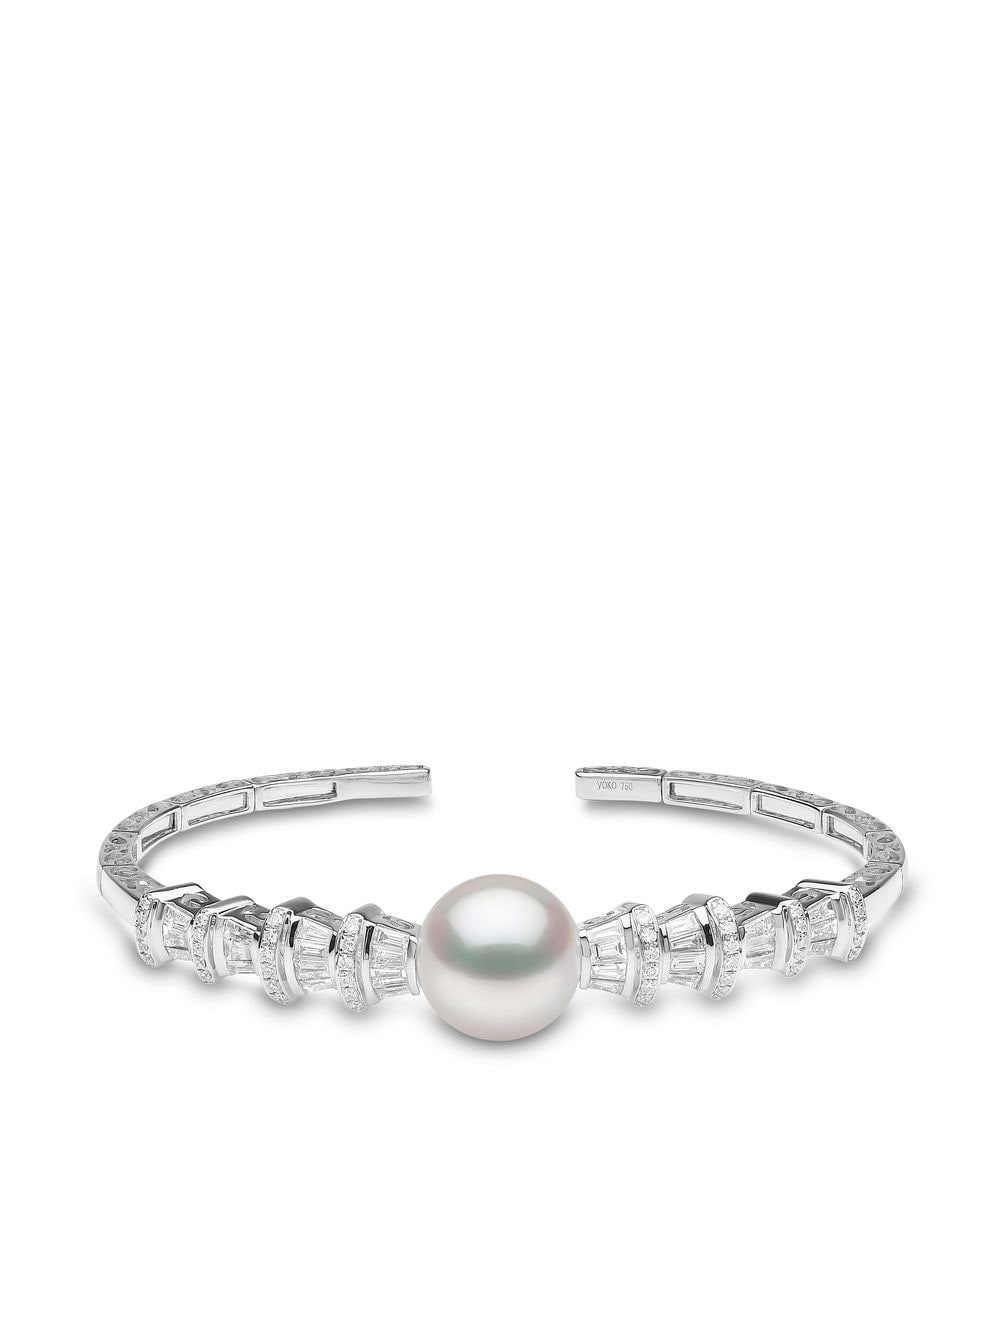 Yoko London 18kt white gold Starlight South Sea pearl and diamond bracelet - Silver